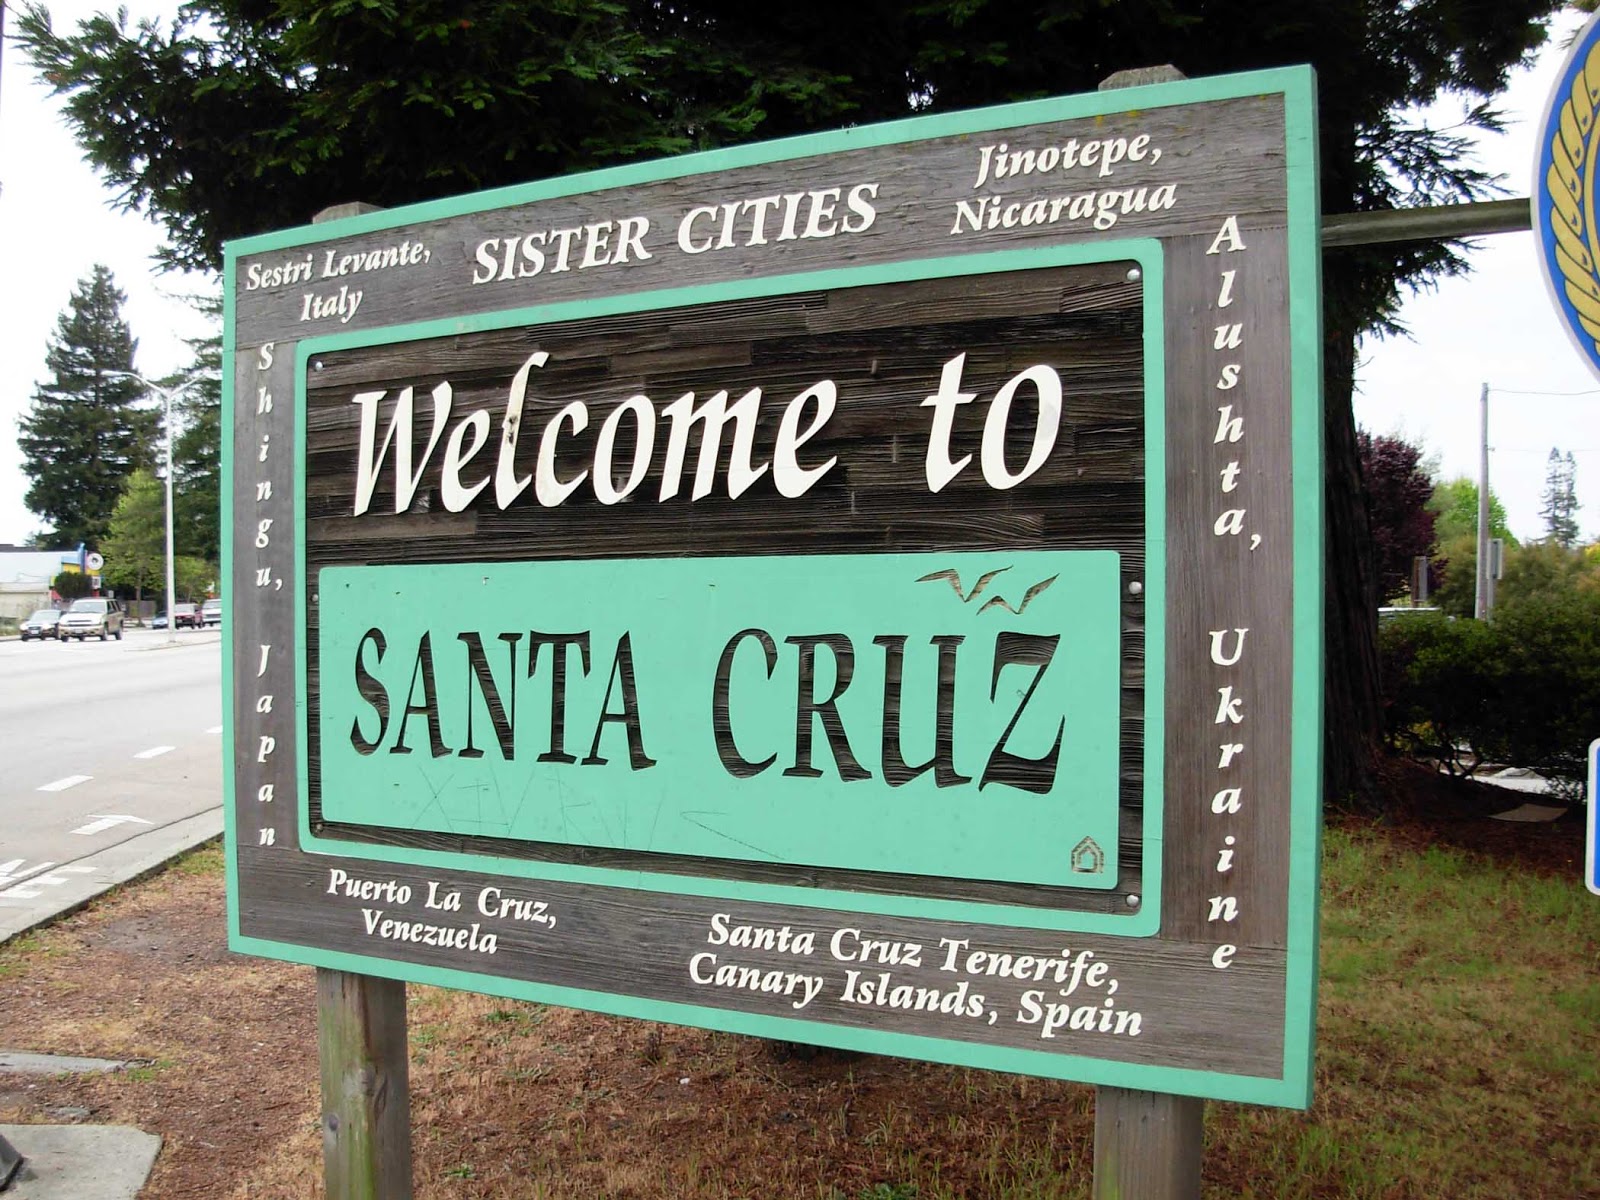 Welcome to Santa Cruz sign